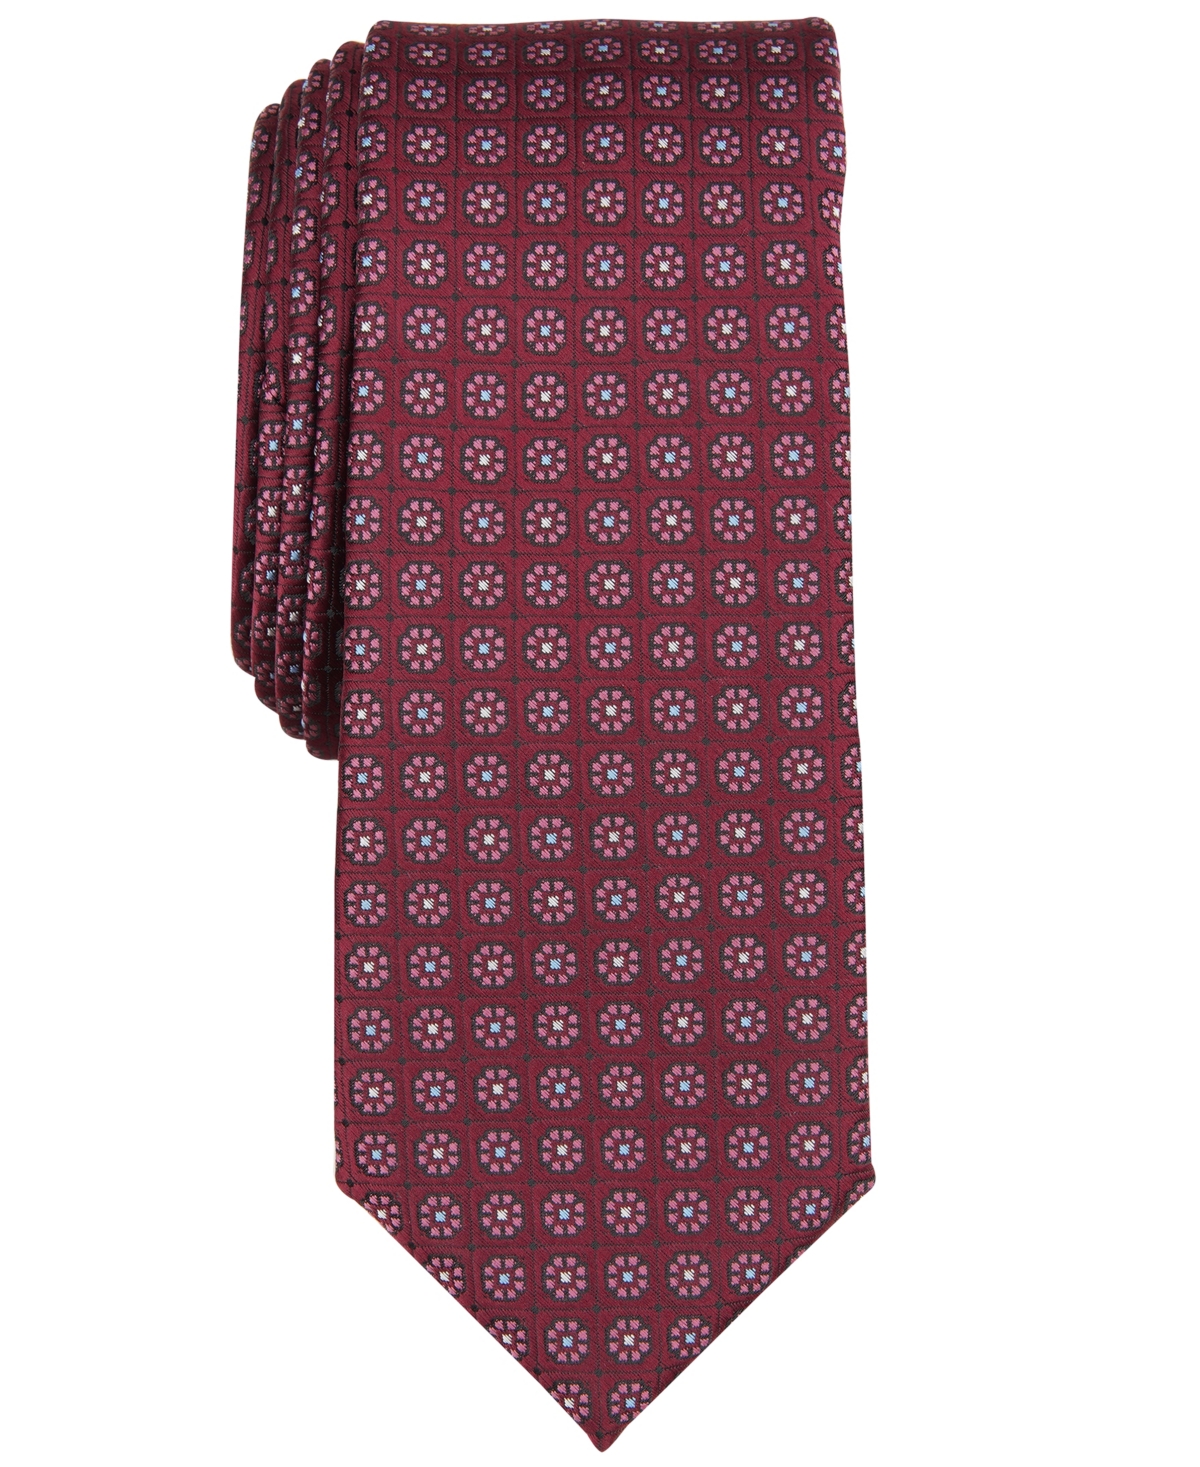 Men's Sterling Neat Skinny Tie, Created for Macy's - Burgundy